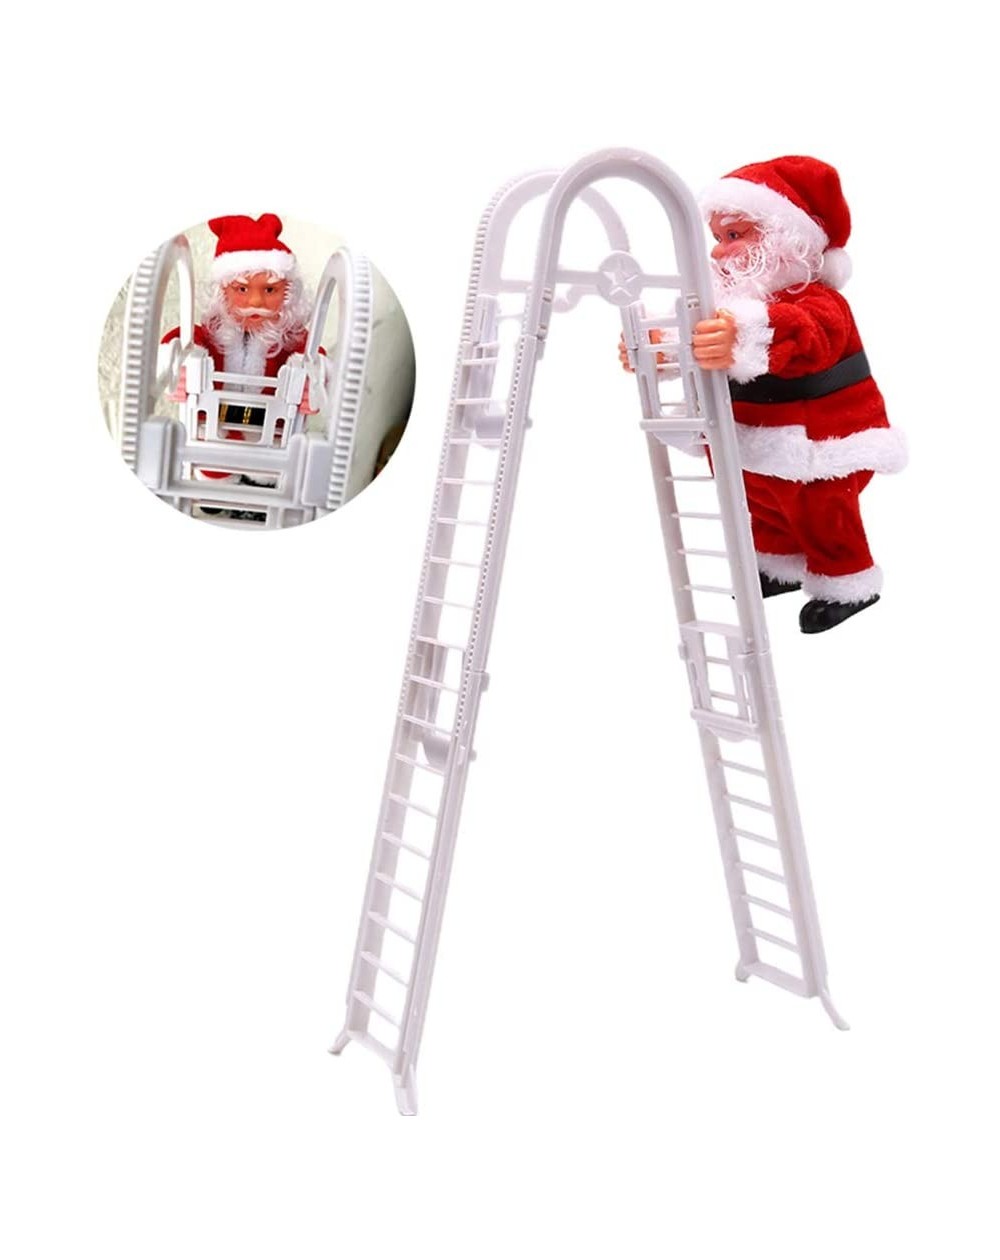 Ornaments Santa Climbing Ladder Christmas Decoration Electric Santa Claus Climbing Rope Ladder- Christmas Super Climbing Sant...